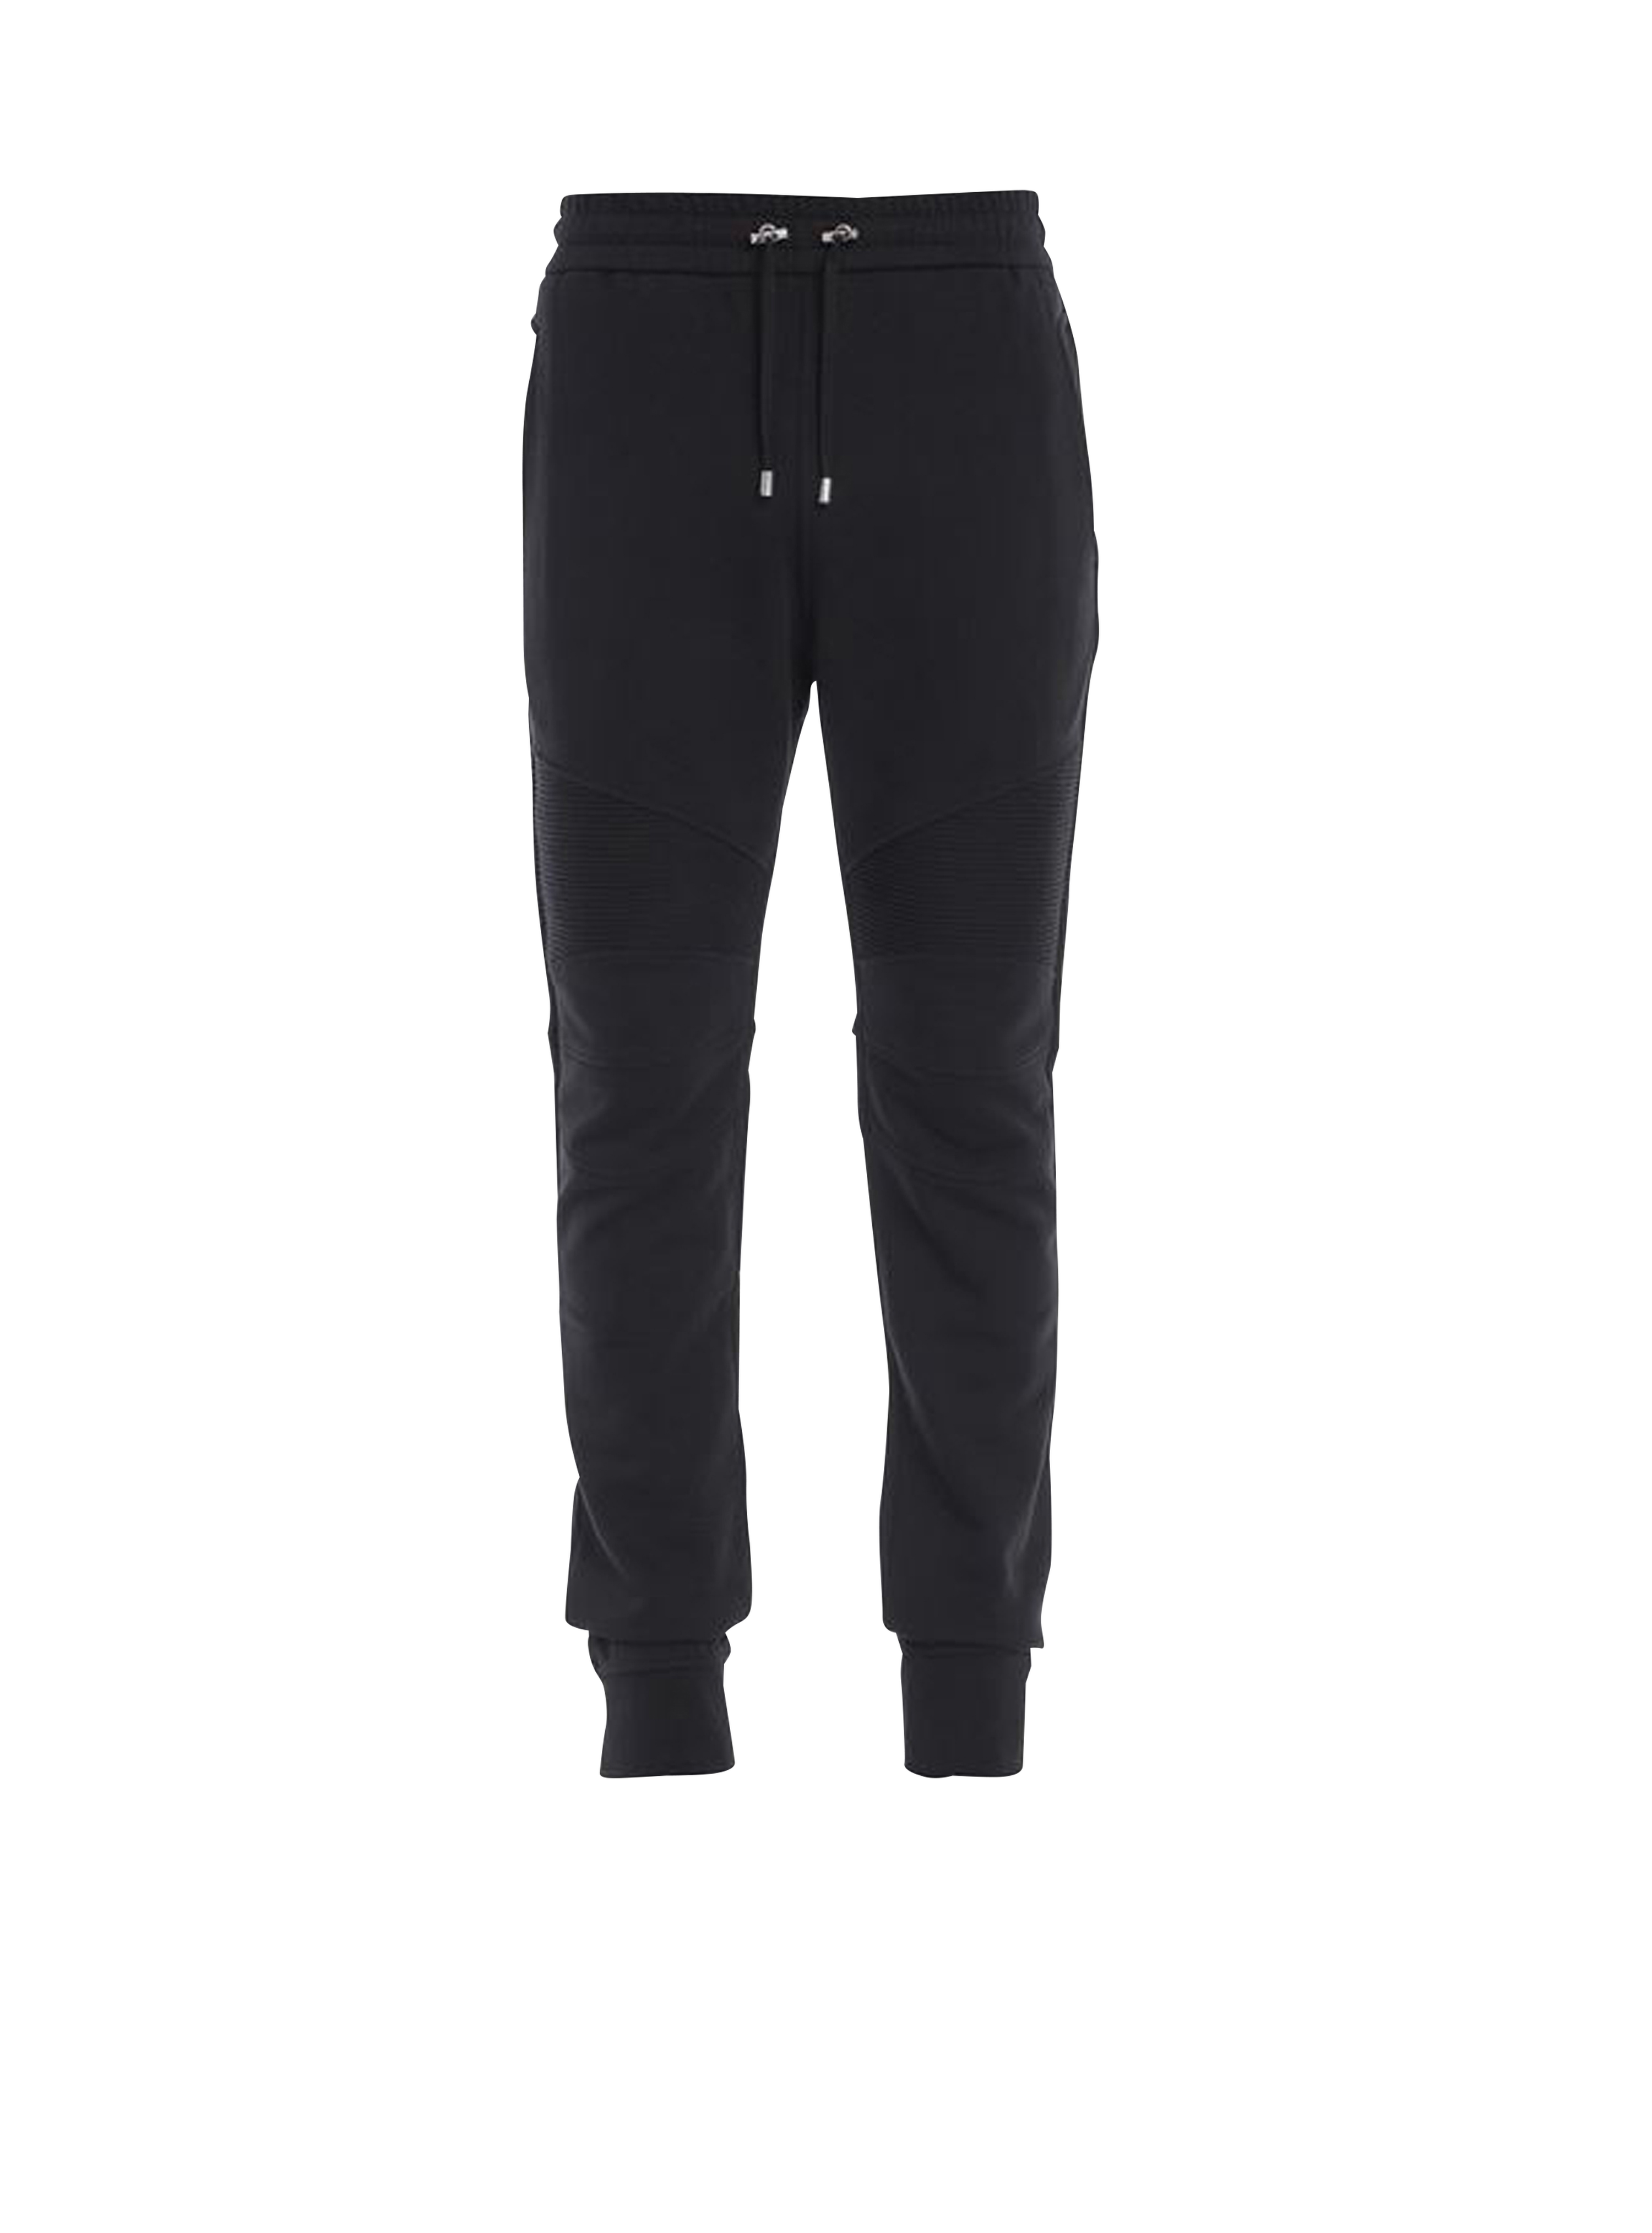 Cotton sweatpants with flocked Balmain Paris logo, black